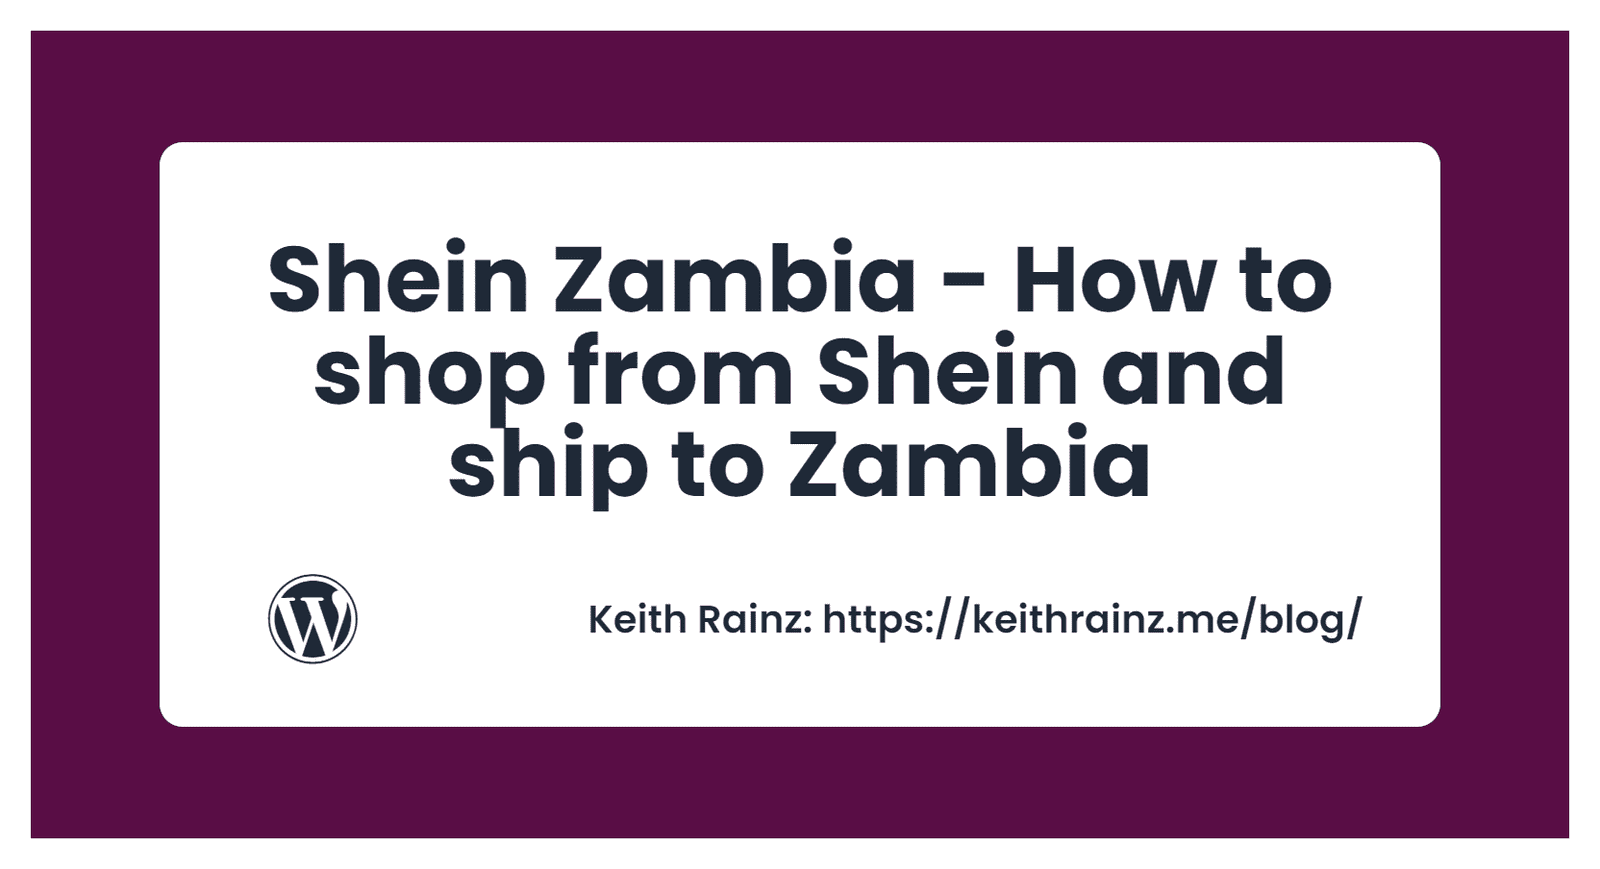 Shein Zambia - How to shop from Shein and ship to Zambia